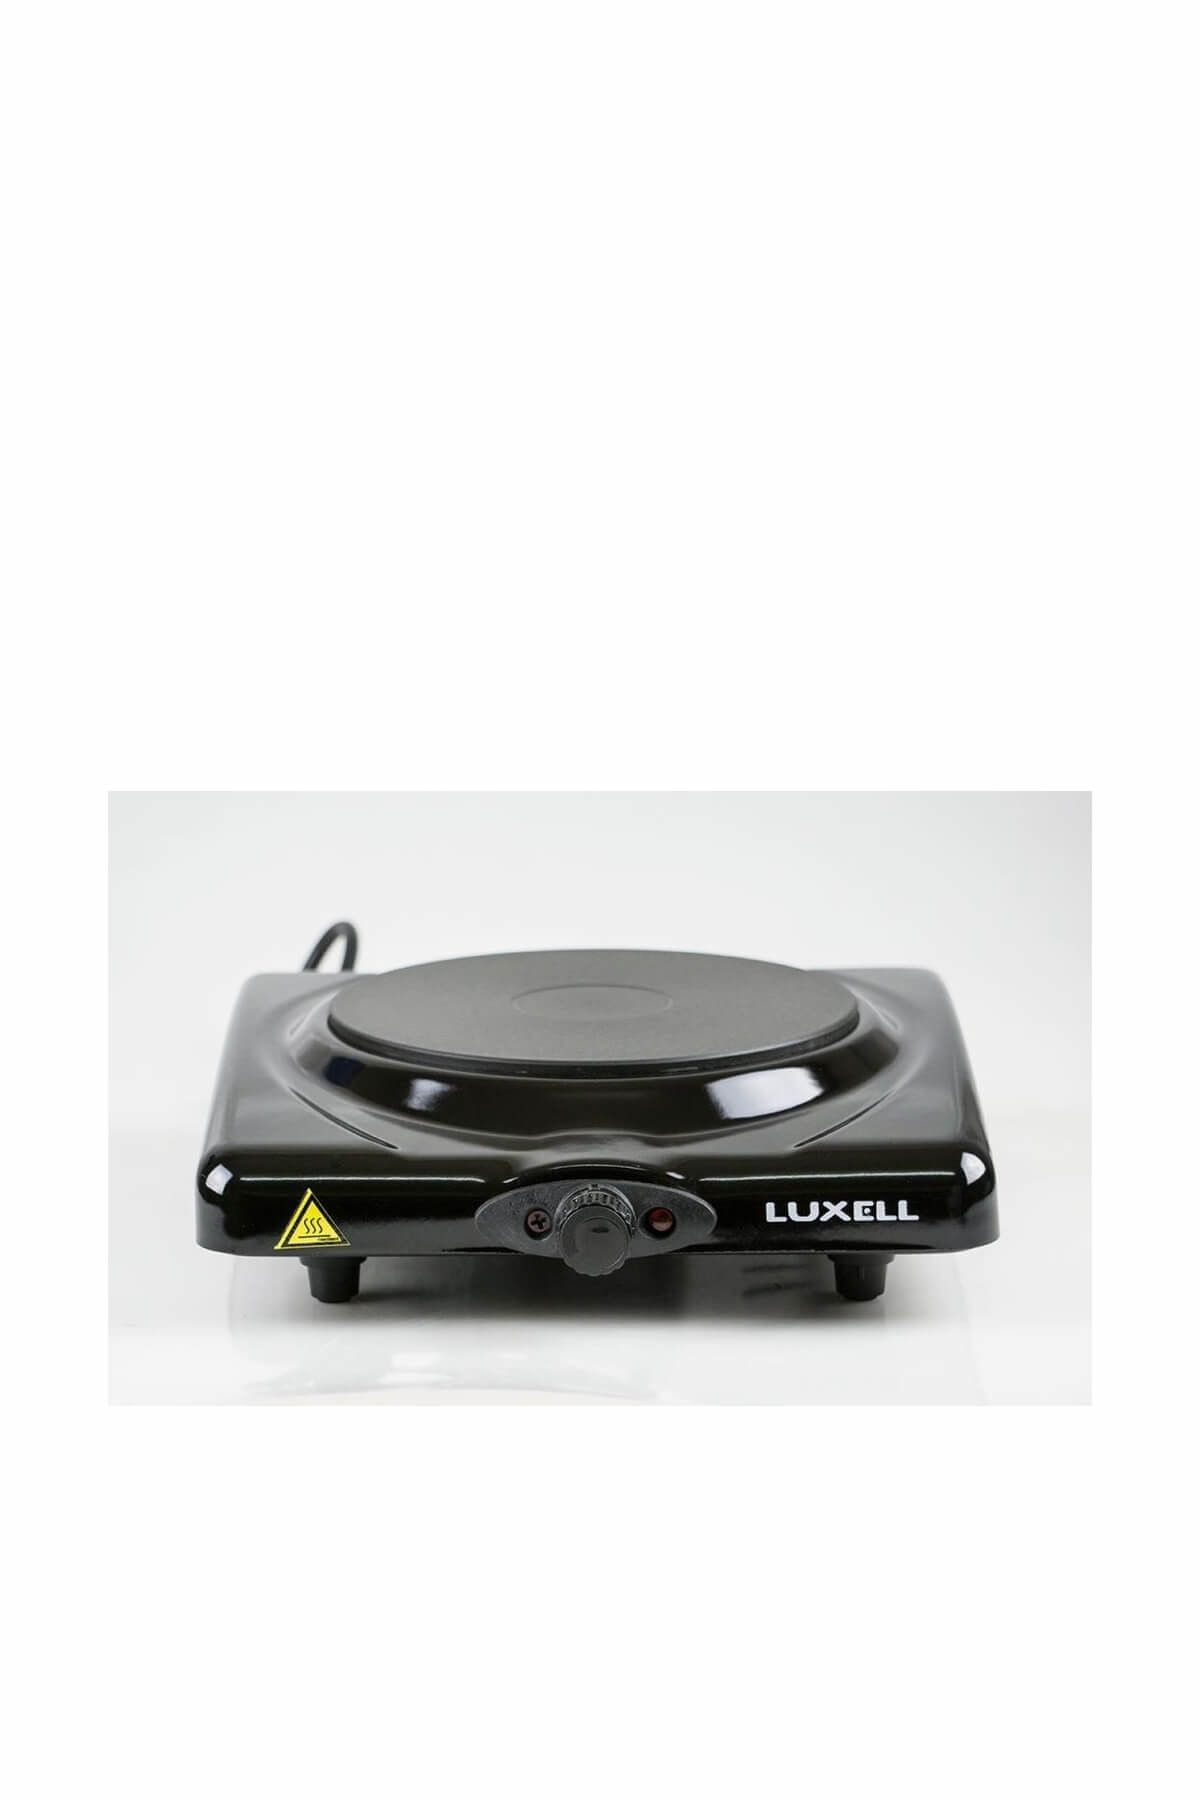 Luxell LX-7115 Tekli Pleyt 1500 Watt Termostatlı Elektrikli Ocak SIYAH